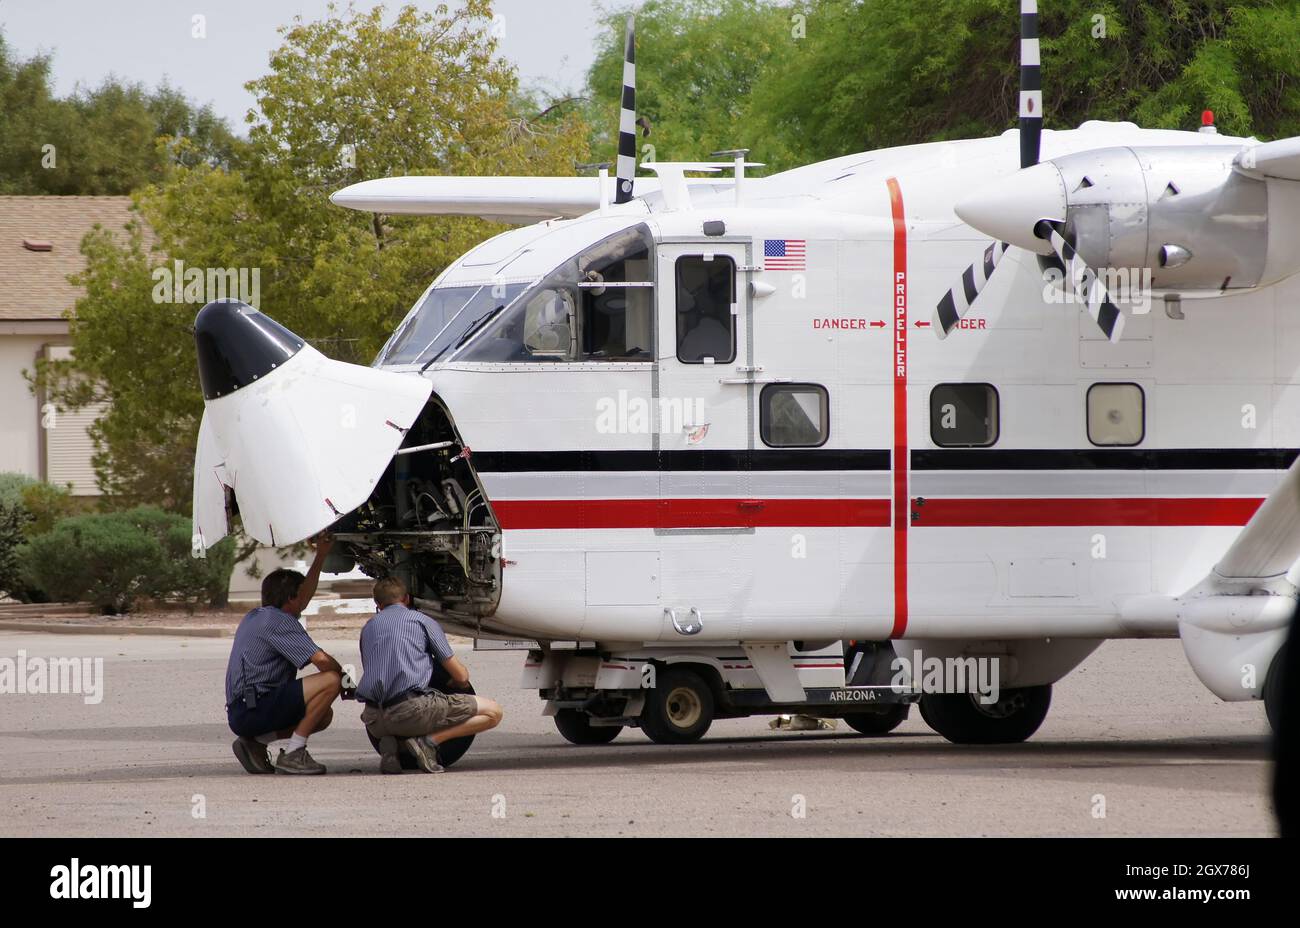 April 25, 2012. Arizona United States of America. Mechanics analyzing and repairing a Skyvan plane before the flight. Stock Photo